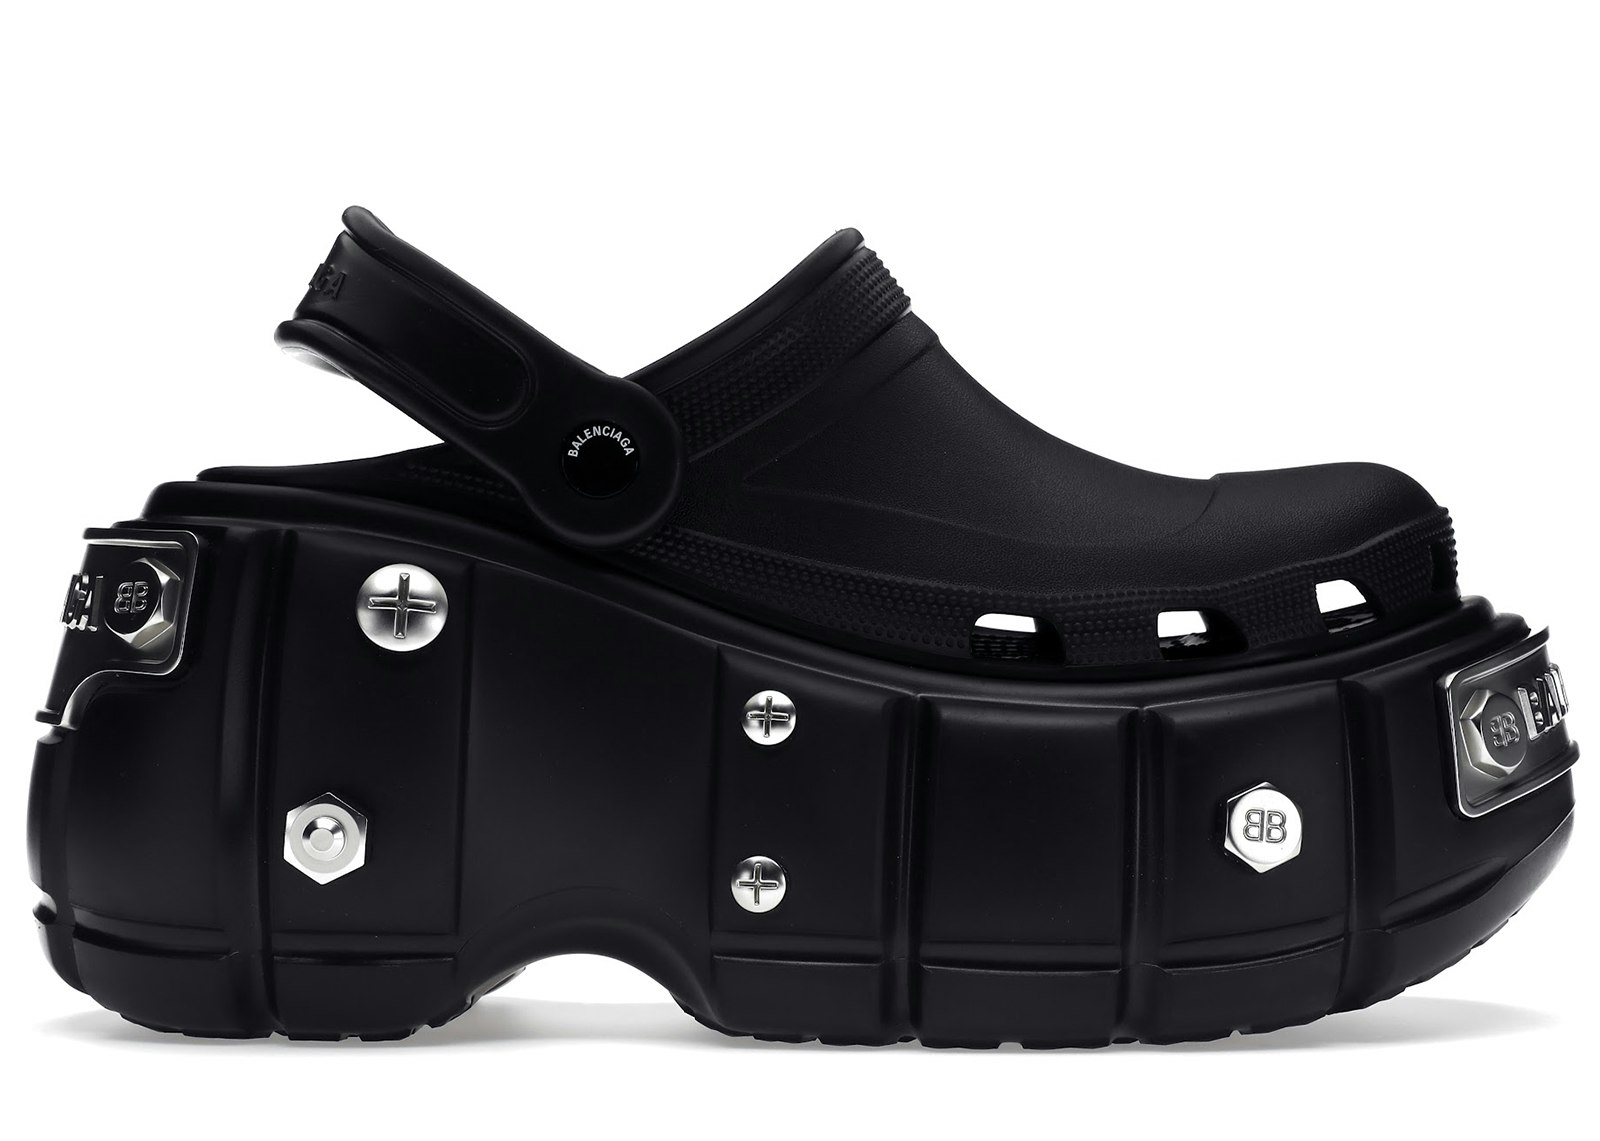 What a Croc Balenciaga creates a platform version of the worlds ugliest  shoe  Stuffconz